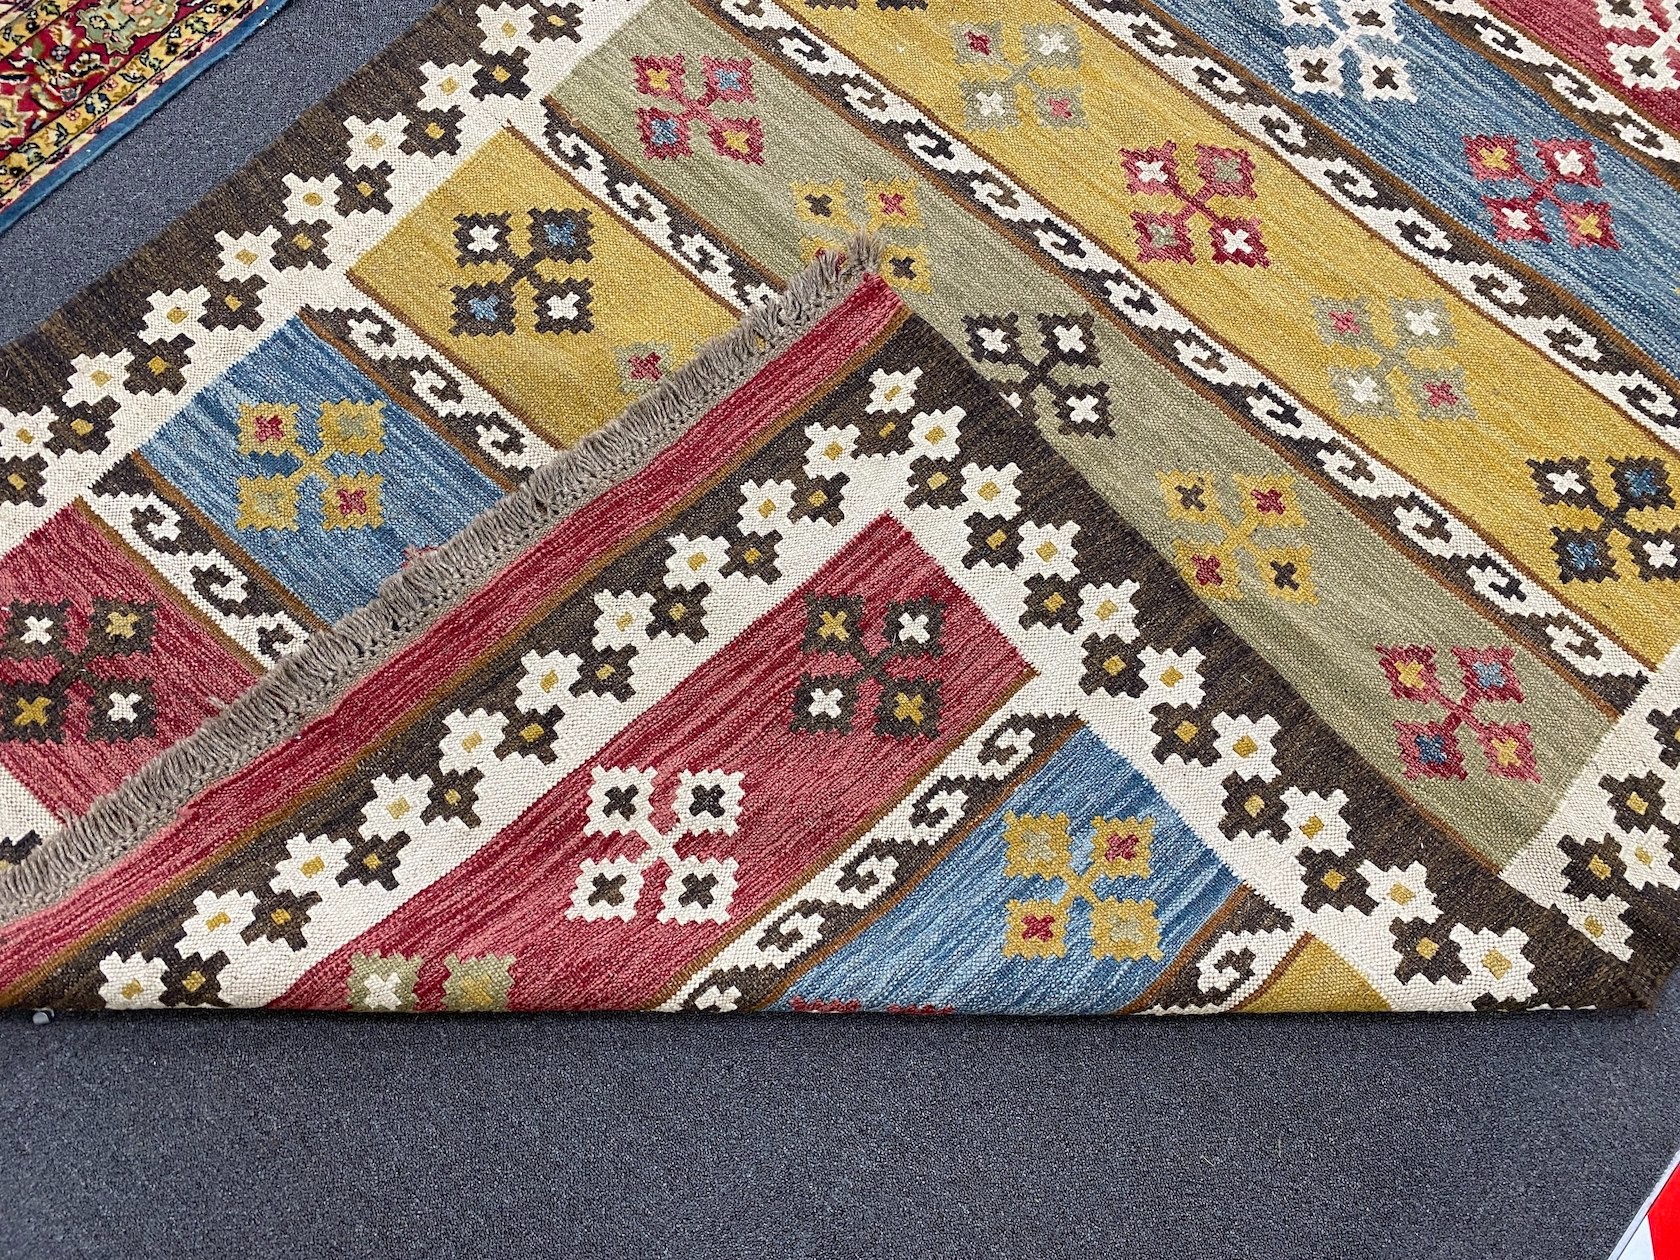 A Kilim polychrome flat weave carpet, 240 x 170cm